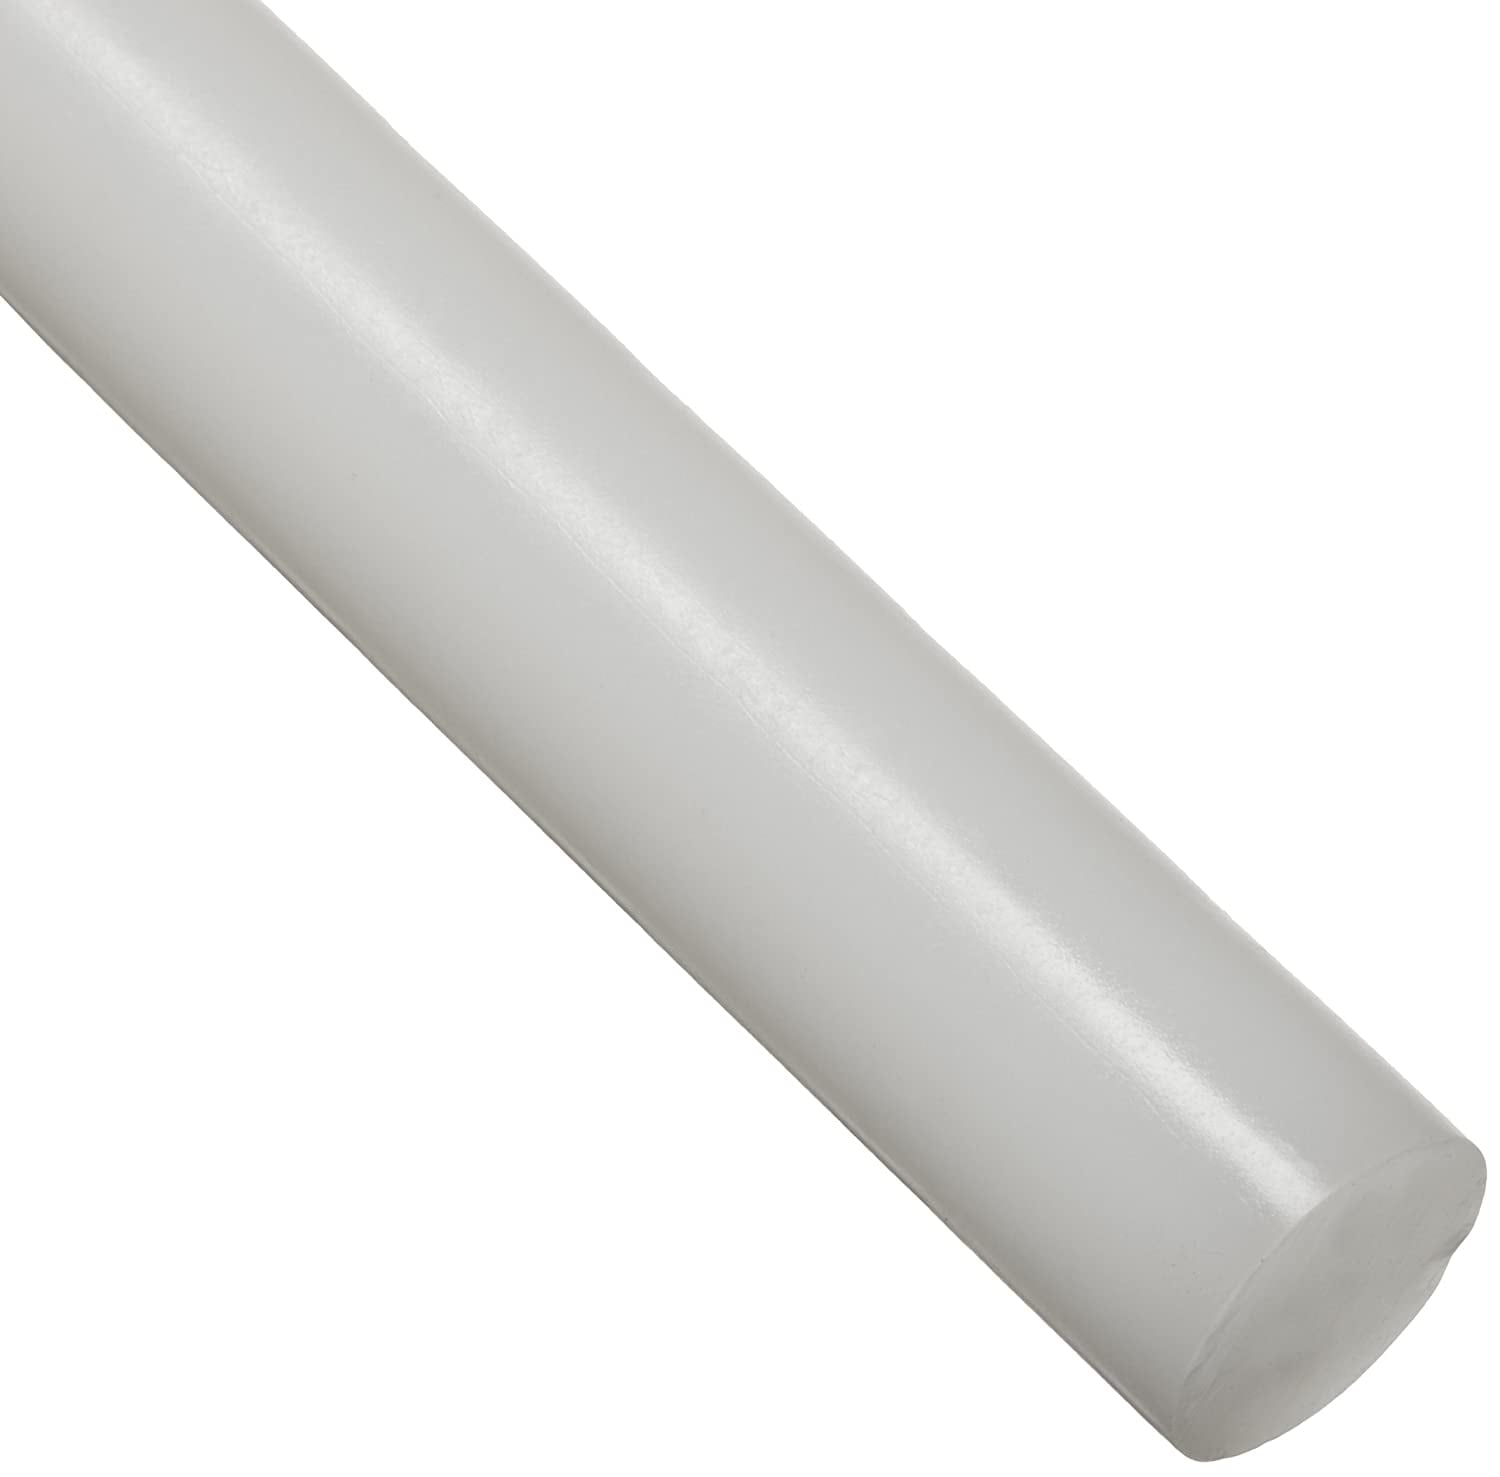 ASTM D4020 Standard Tolerance Ultra High Molecular Weight Polyethylene Opaque Off-White 1/2 Diameter Round Rod UHMW 60 Length